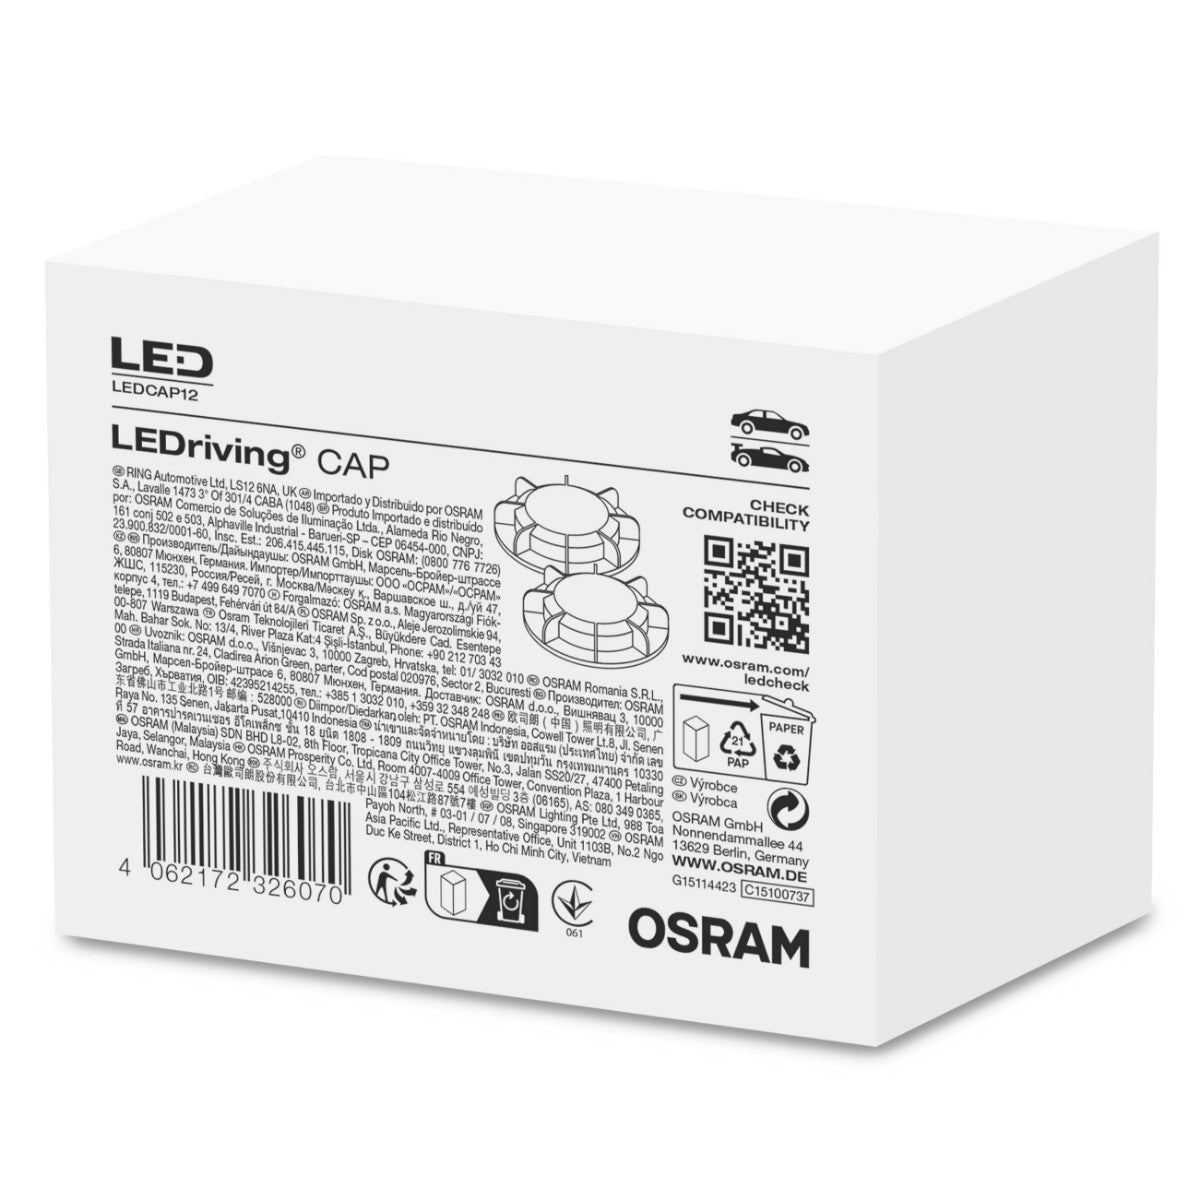 OSRAM LEDriving CAP - LEDCAP12